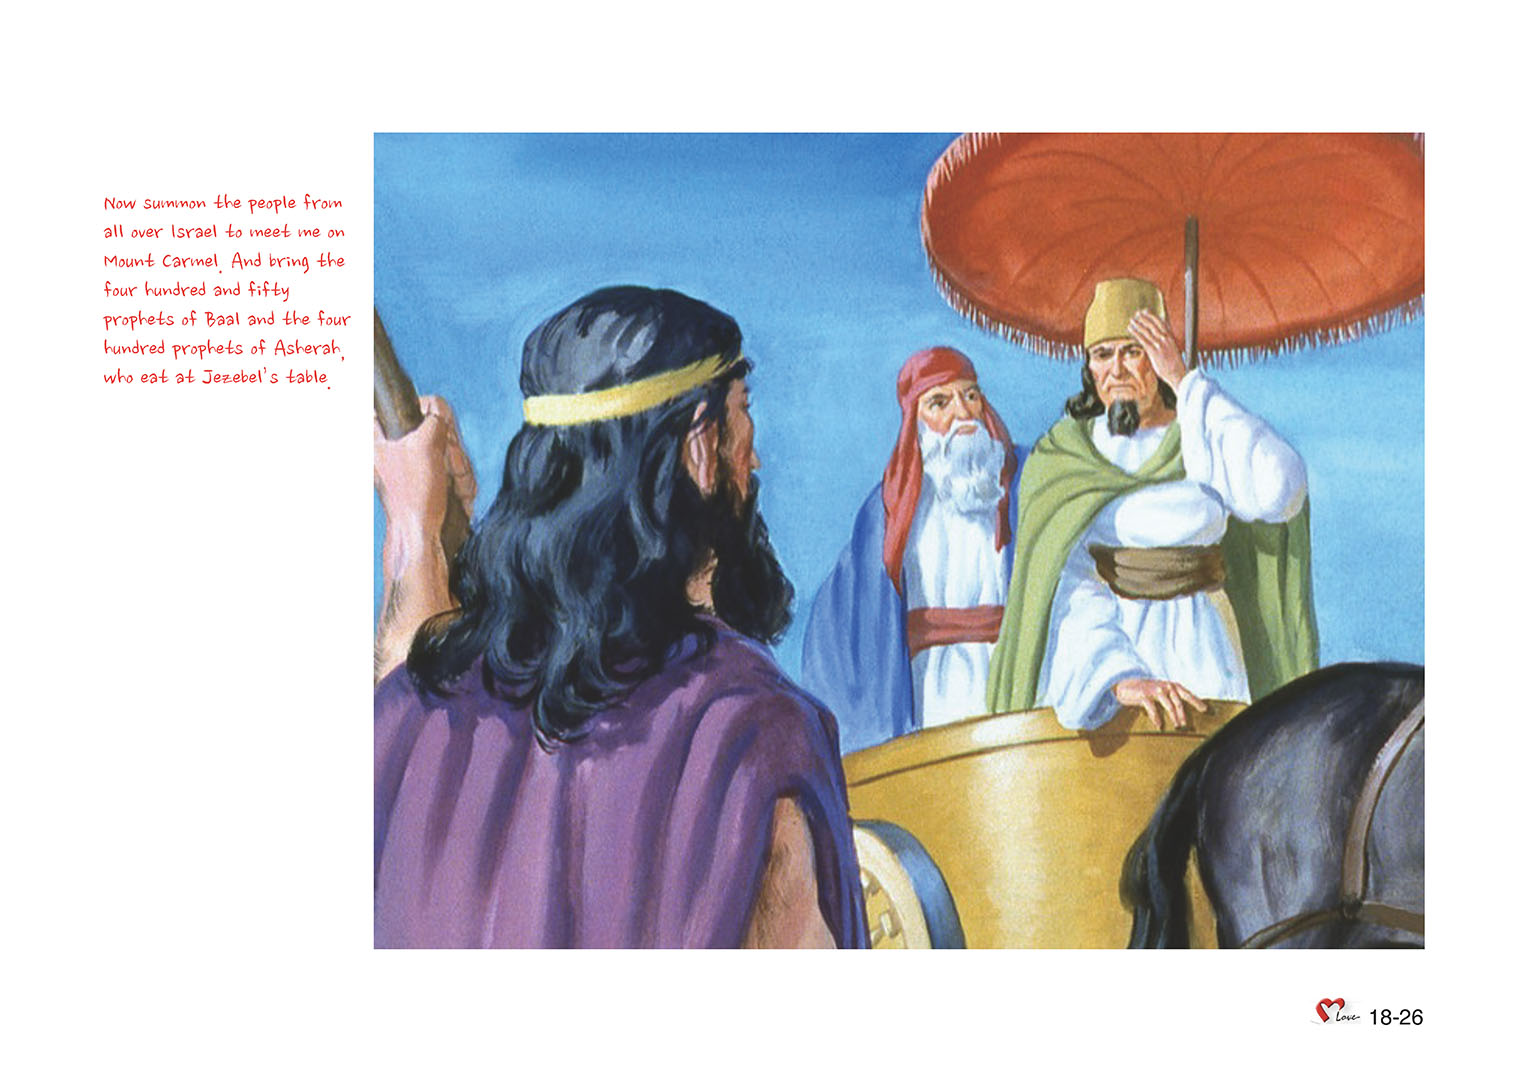 Chapter 18 - Lesson 57 - Prophet Elijah of the Northern Kingdom